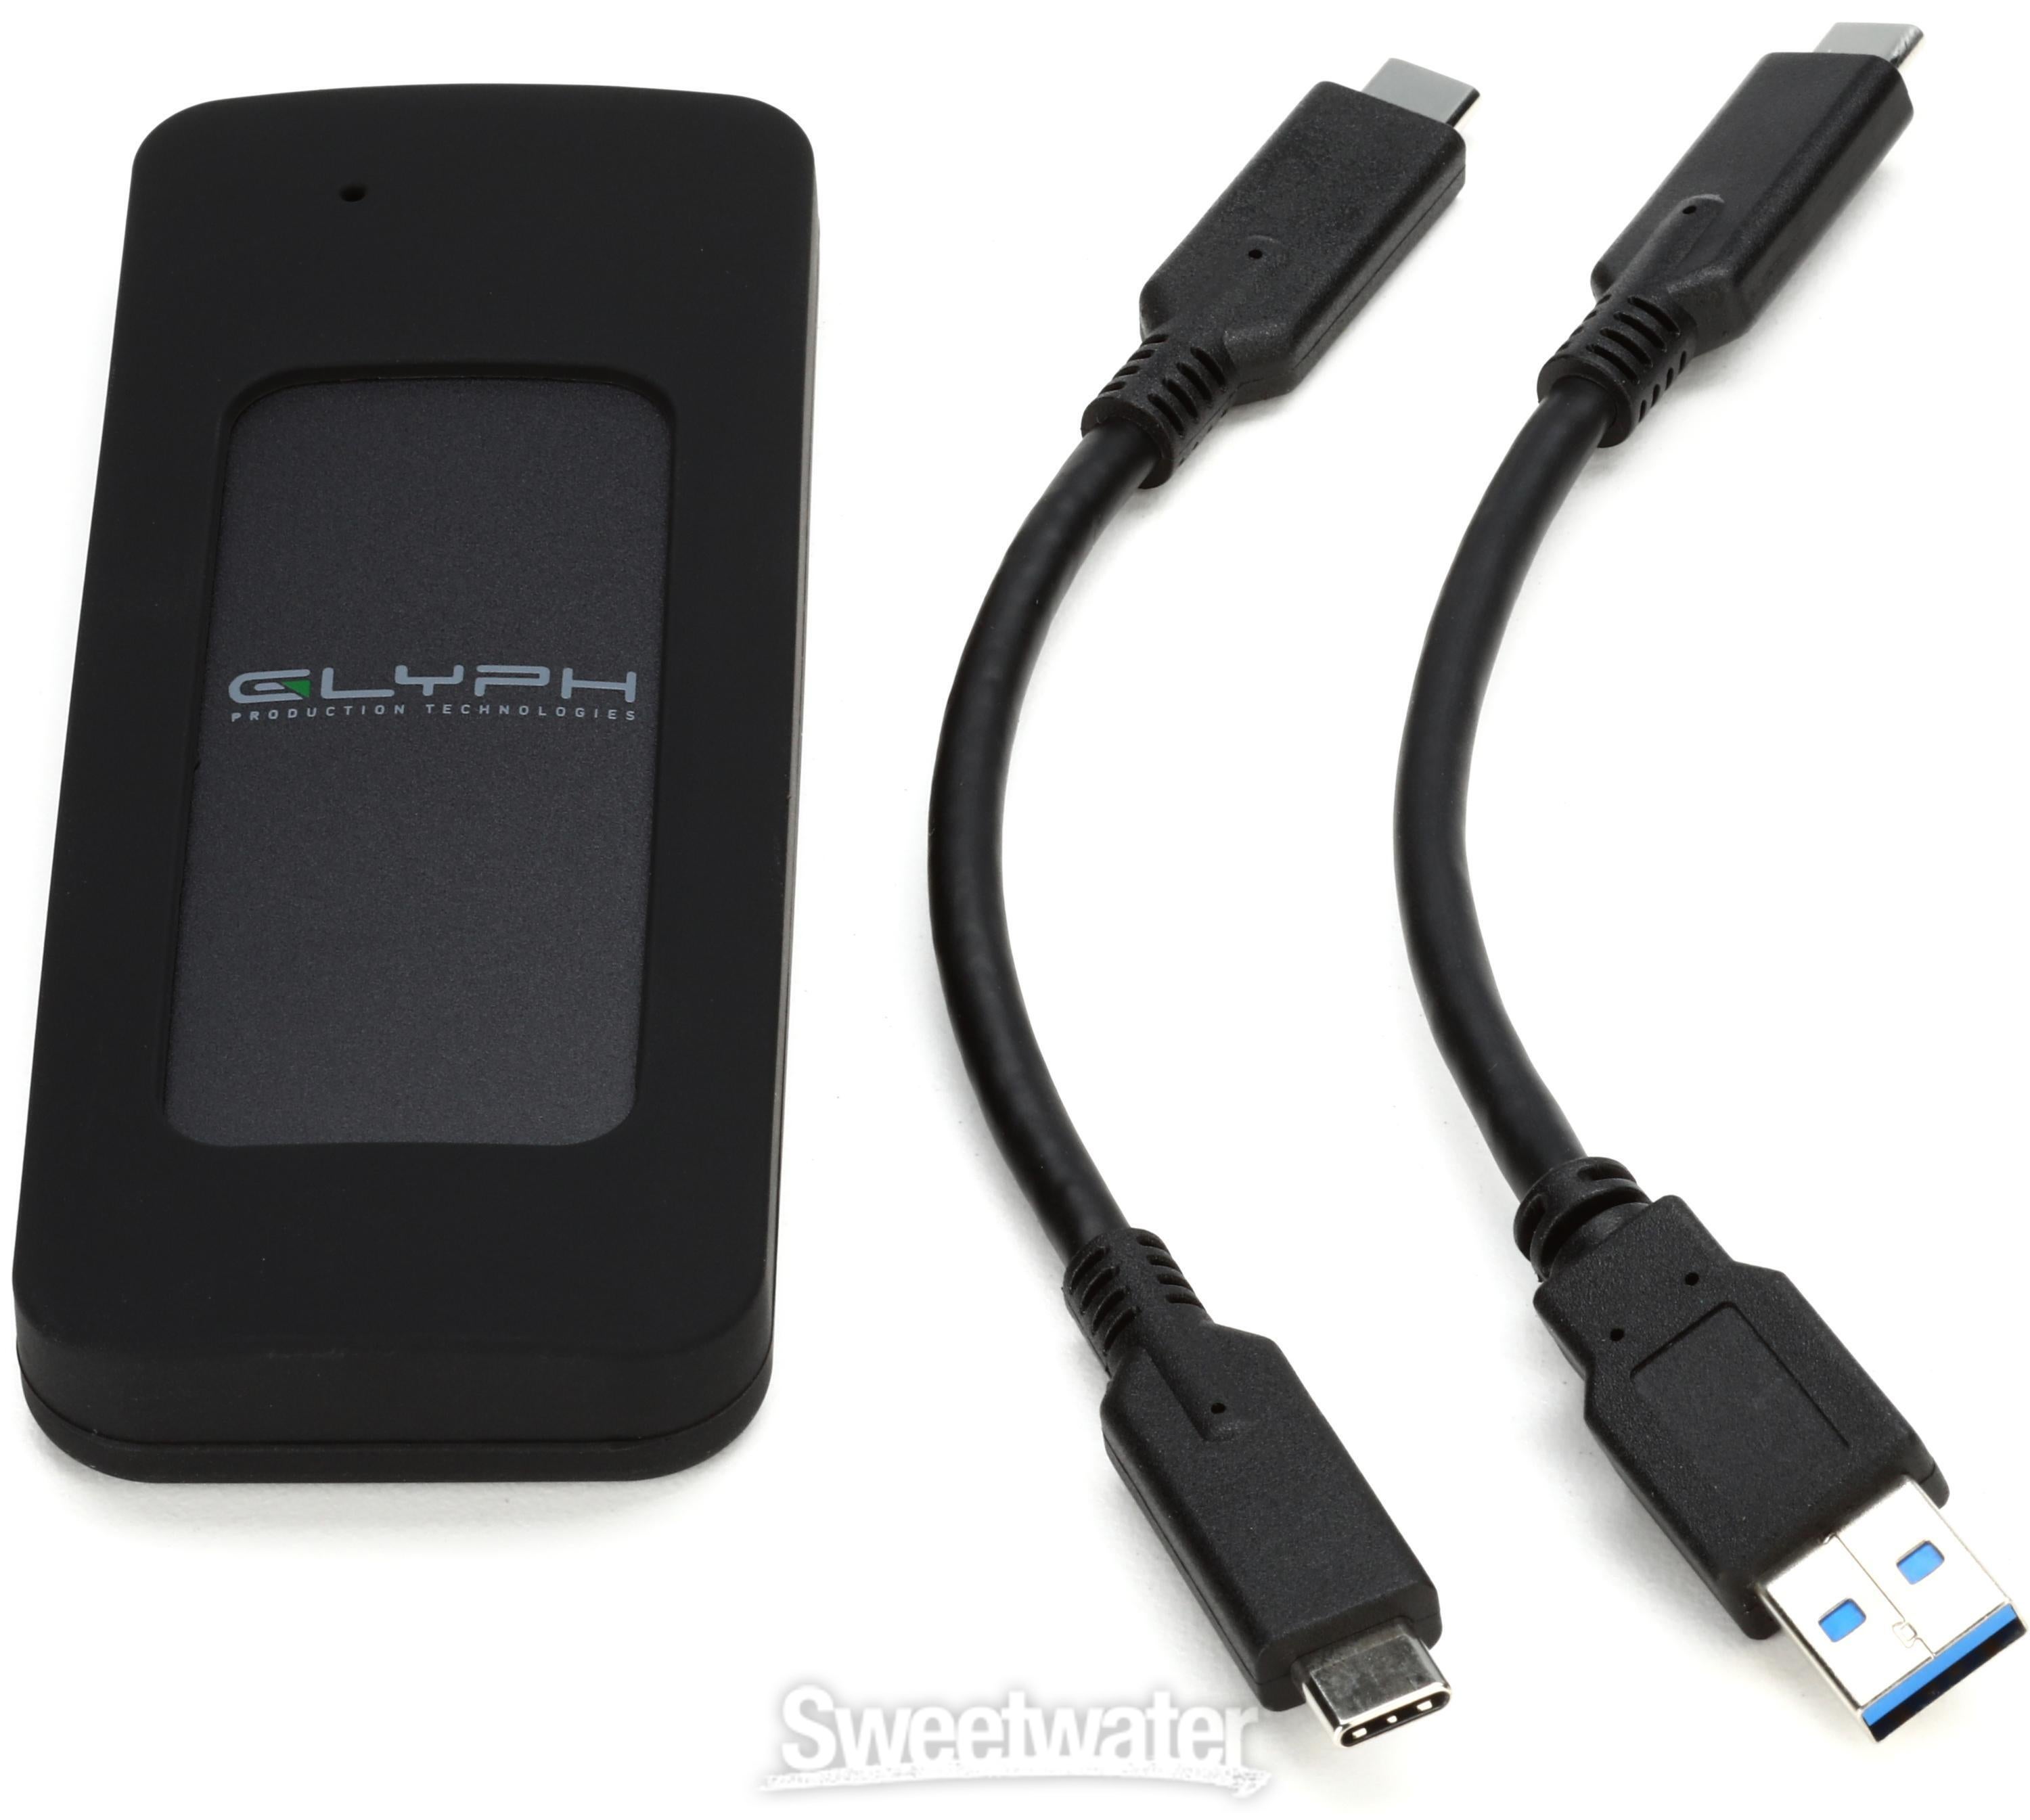 Glyph Atom SSD 1TB USB-C Portable Solid State Drive, Black